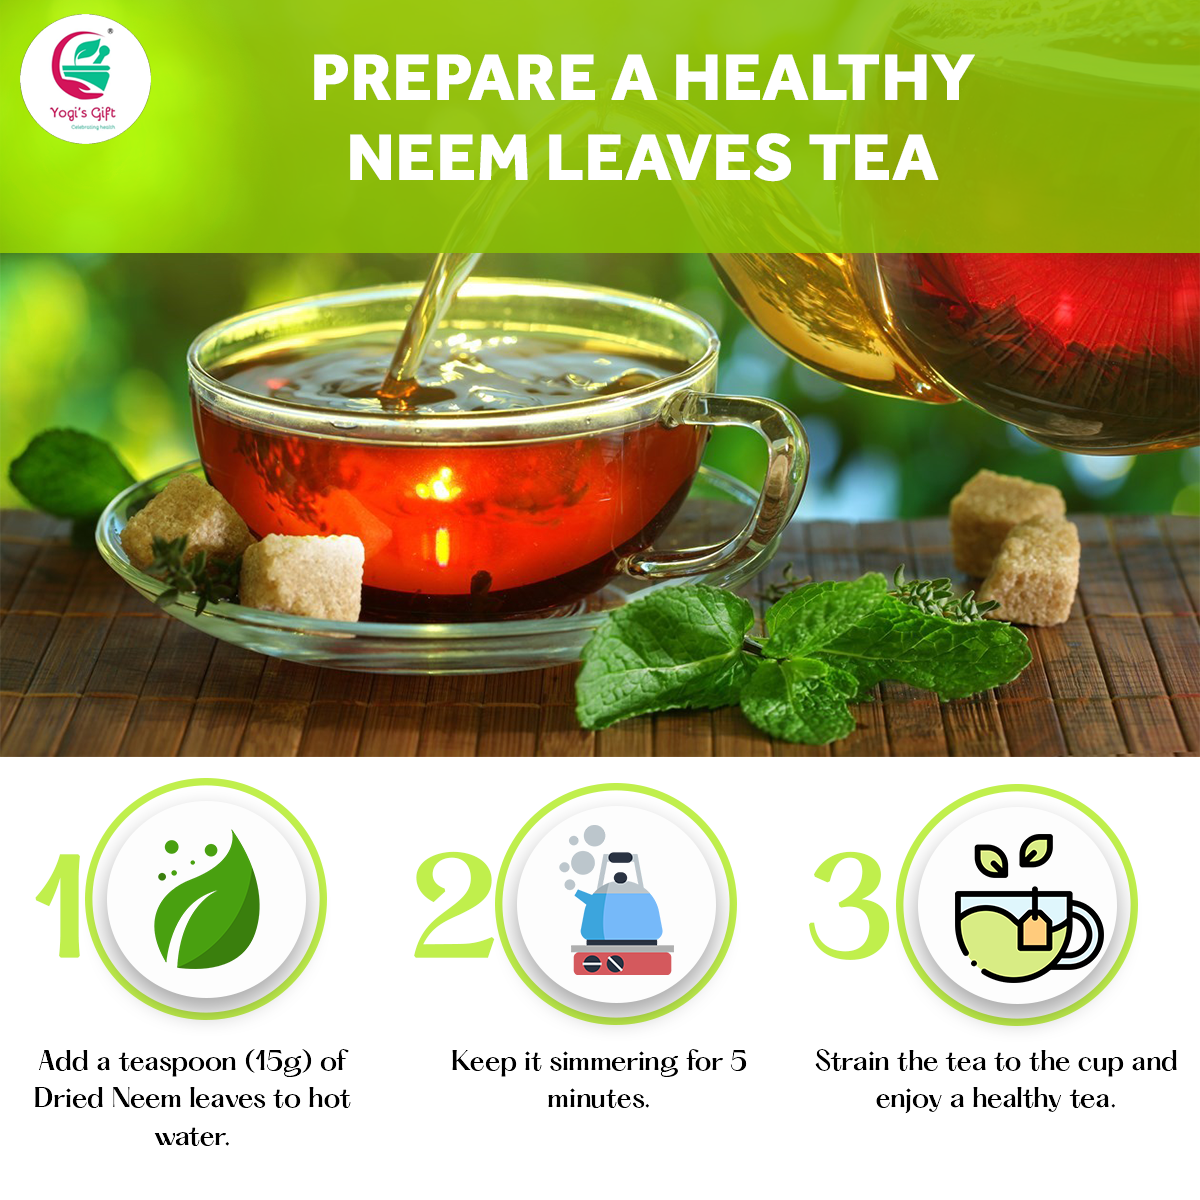 Dried Neem Leaves | 4 oz | 100% Natural Detox Tea (Approx 1800 Whole Leaves) | Azadirachta Indica Leaf | Non-GMO, Gluten Free | Yogi's Gift®